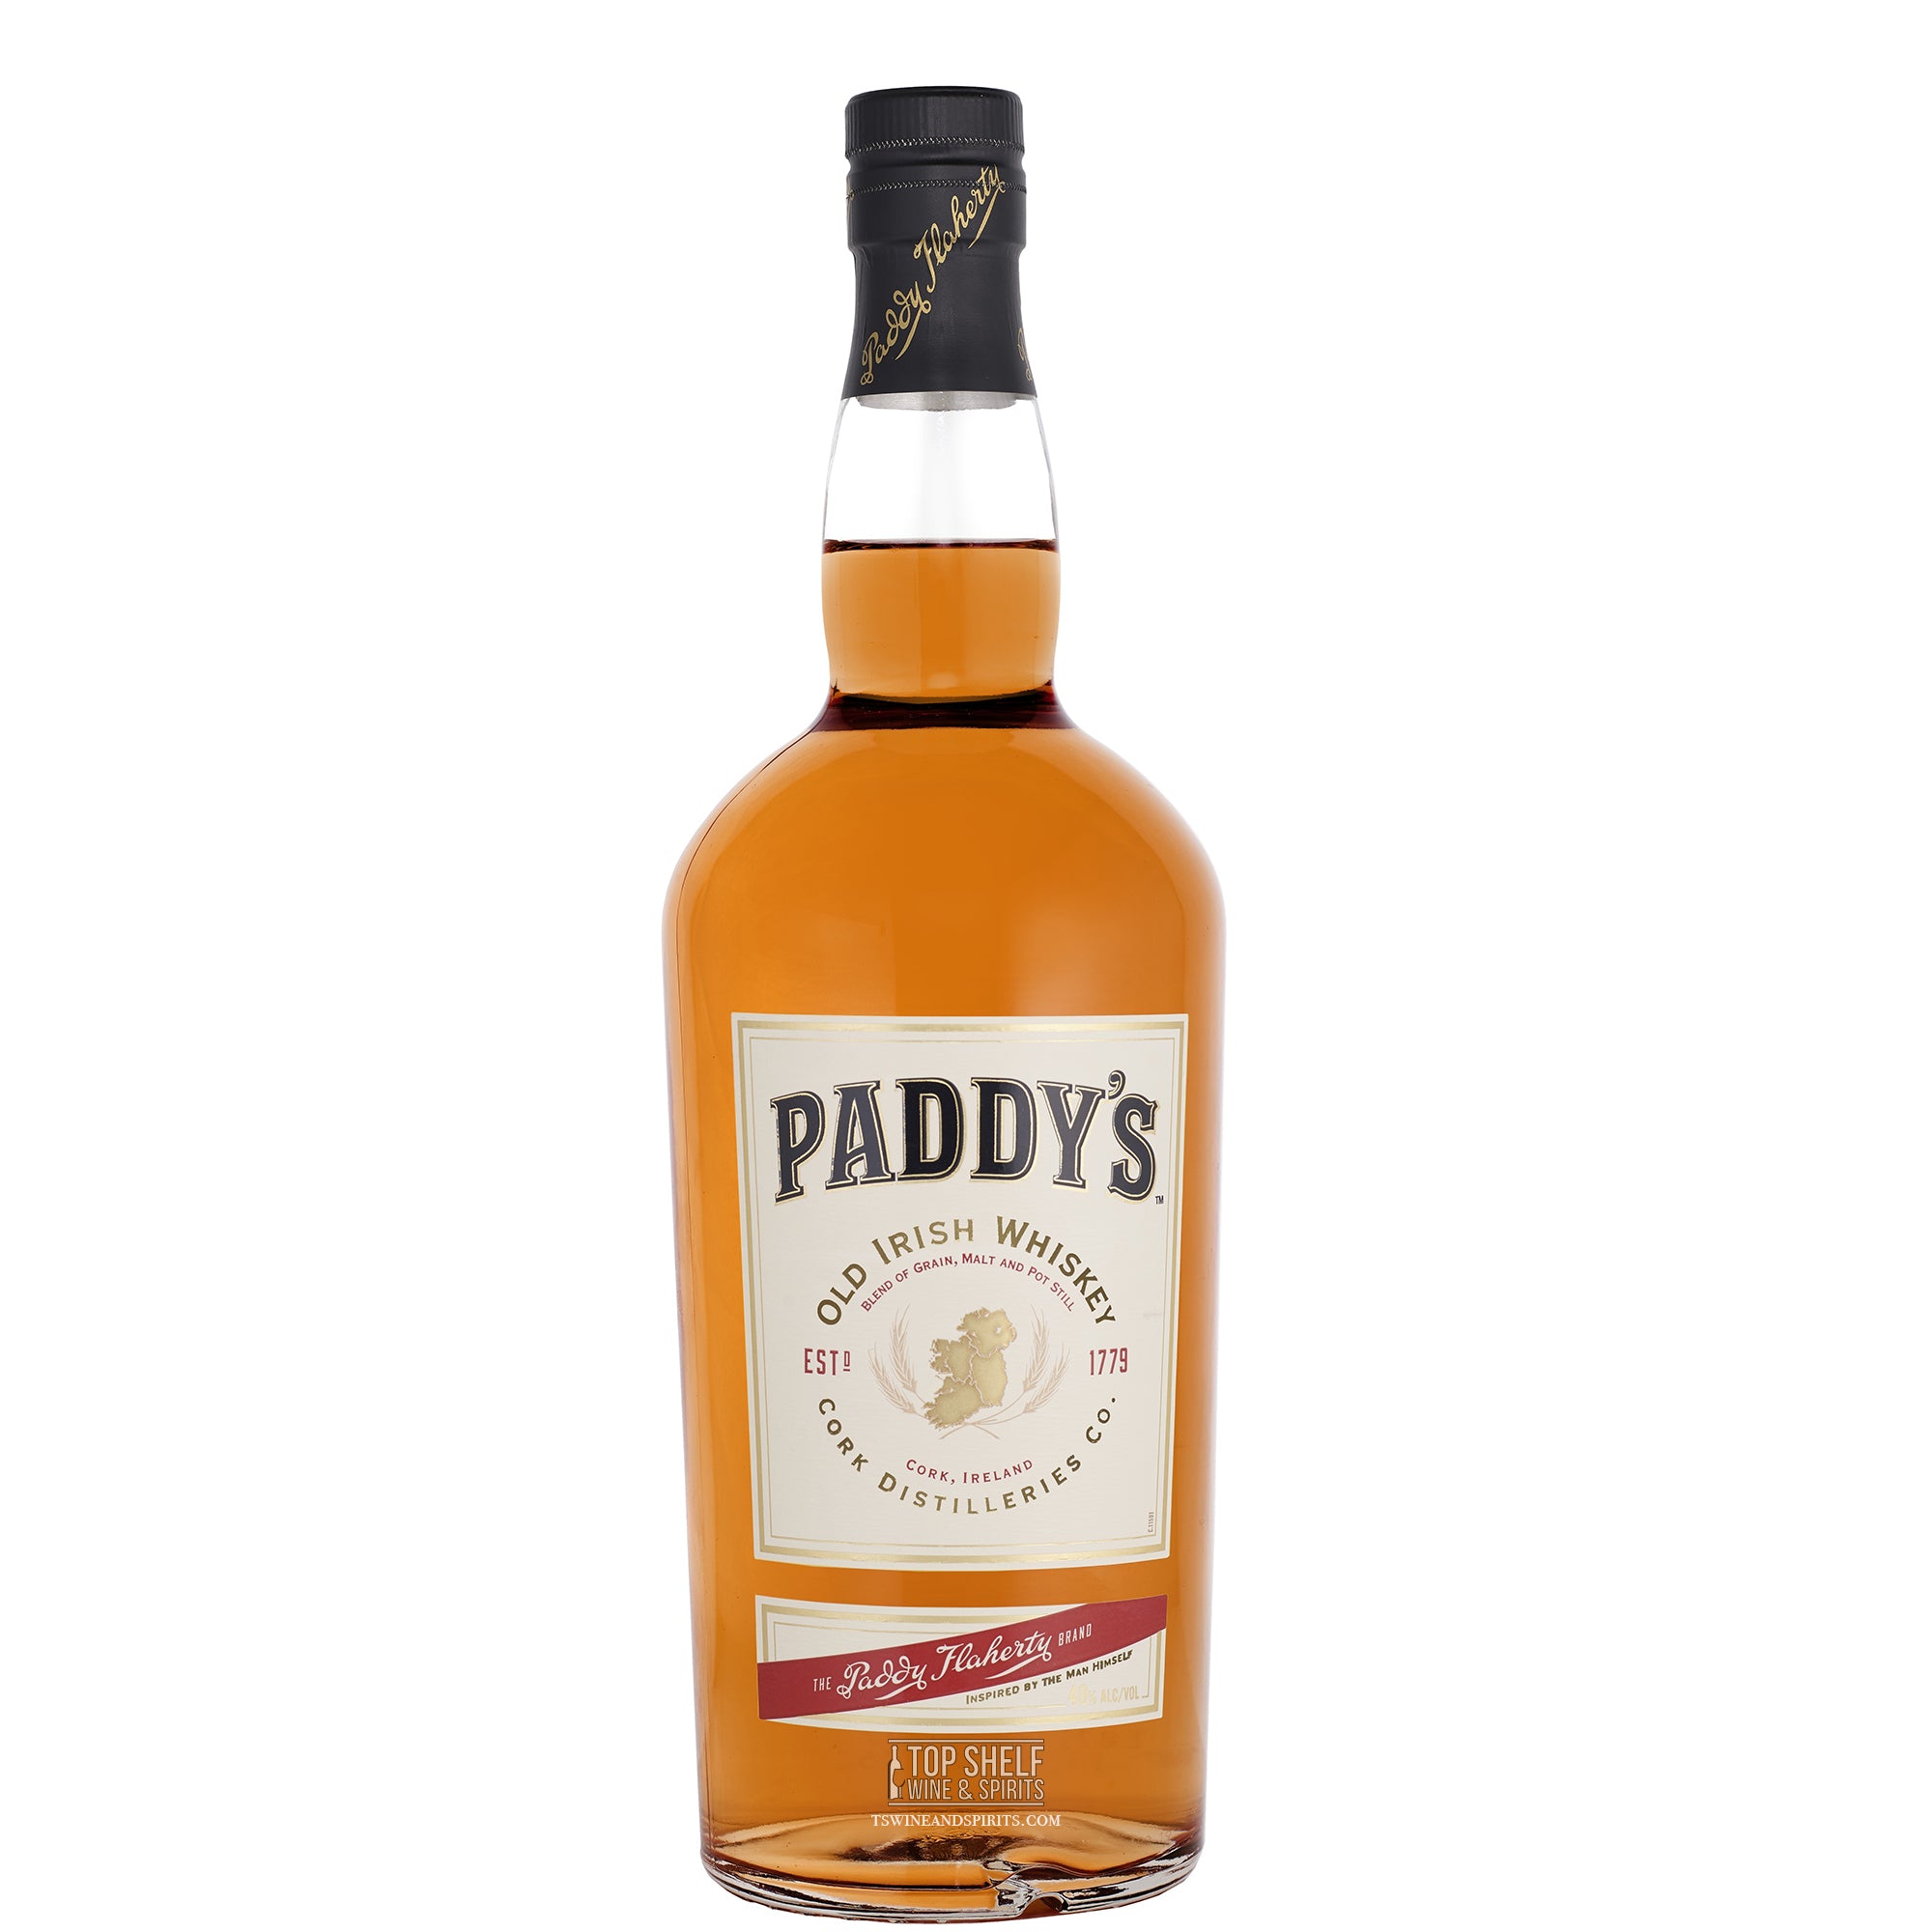 Paddy's Old Irish Whiskey